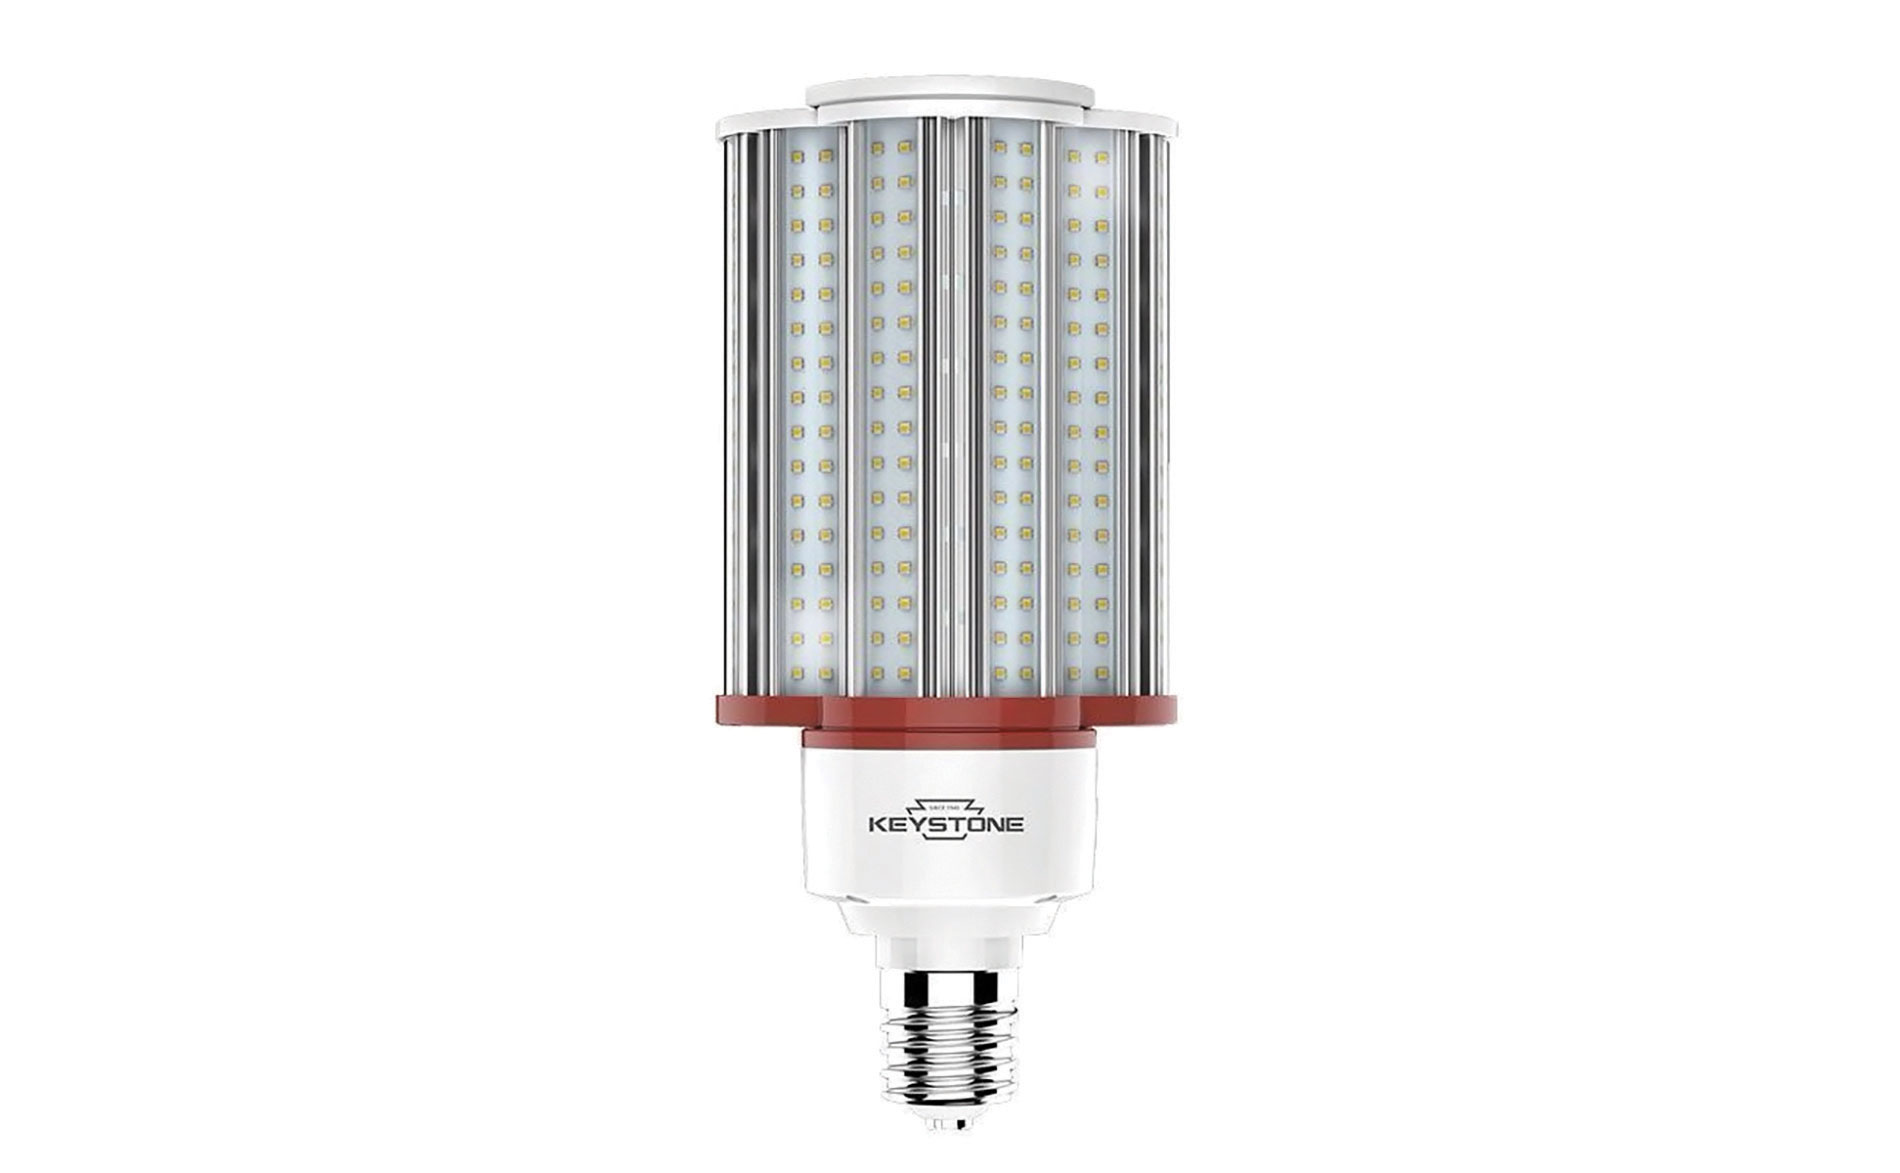 Keystone Technologies’ Xpander Lamp